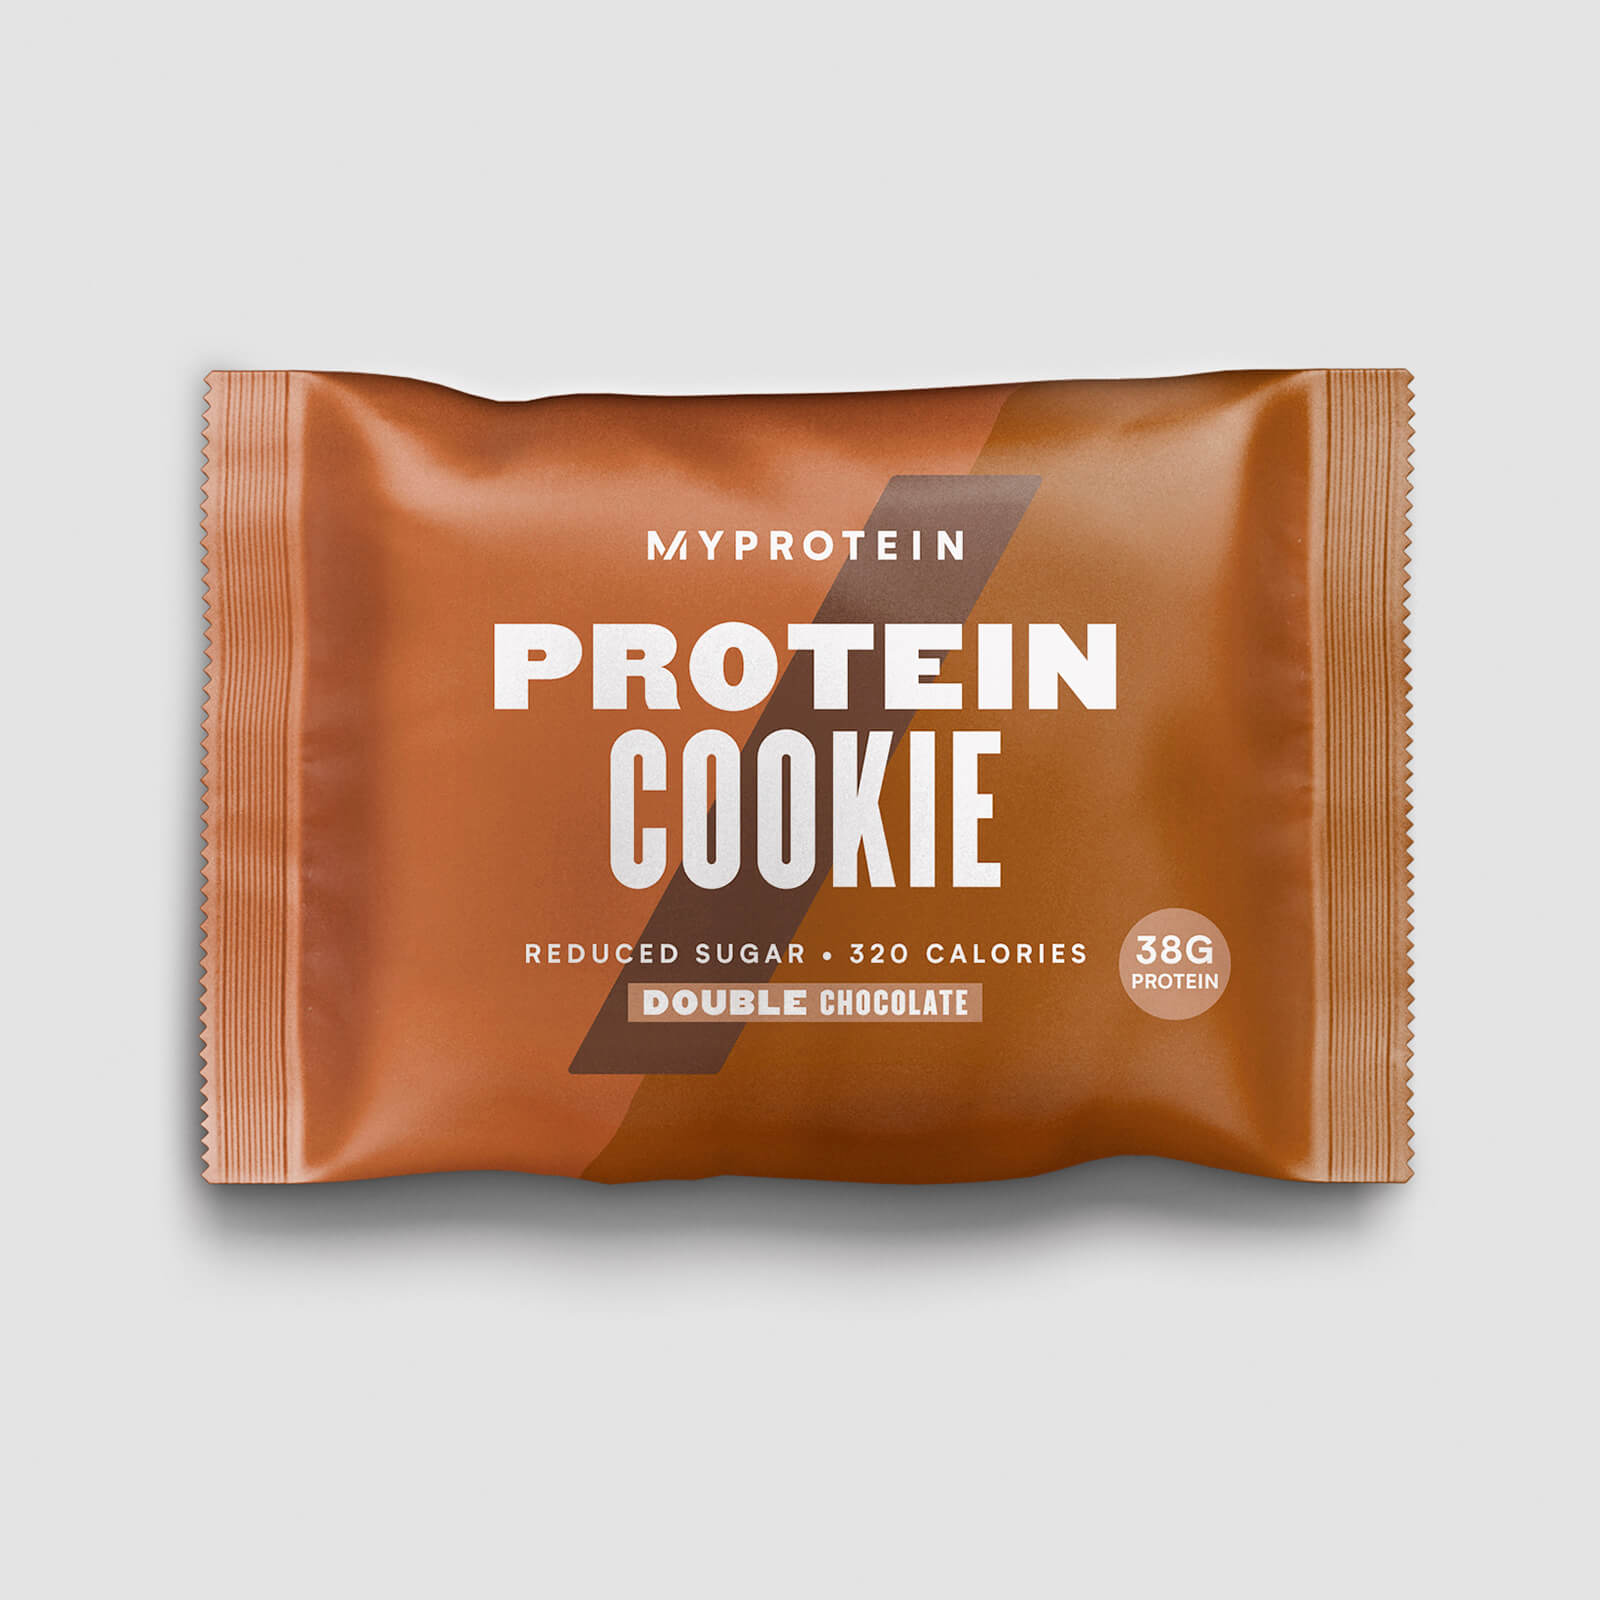 Myprotein Protein Cookie - 12 x 75g - Double Chocolate